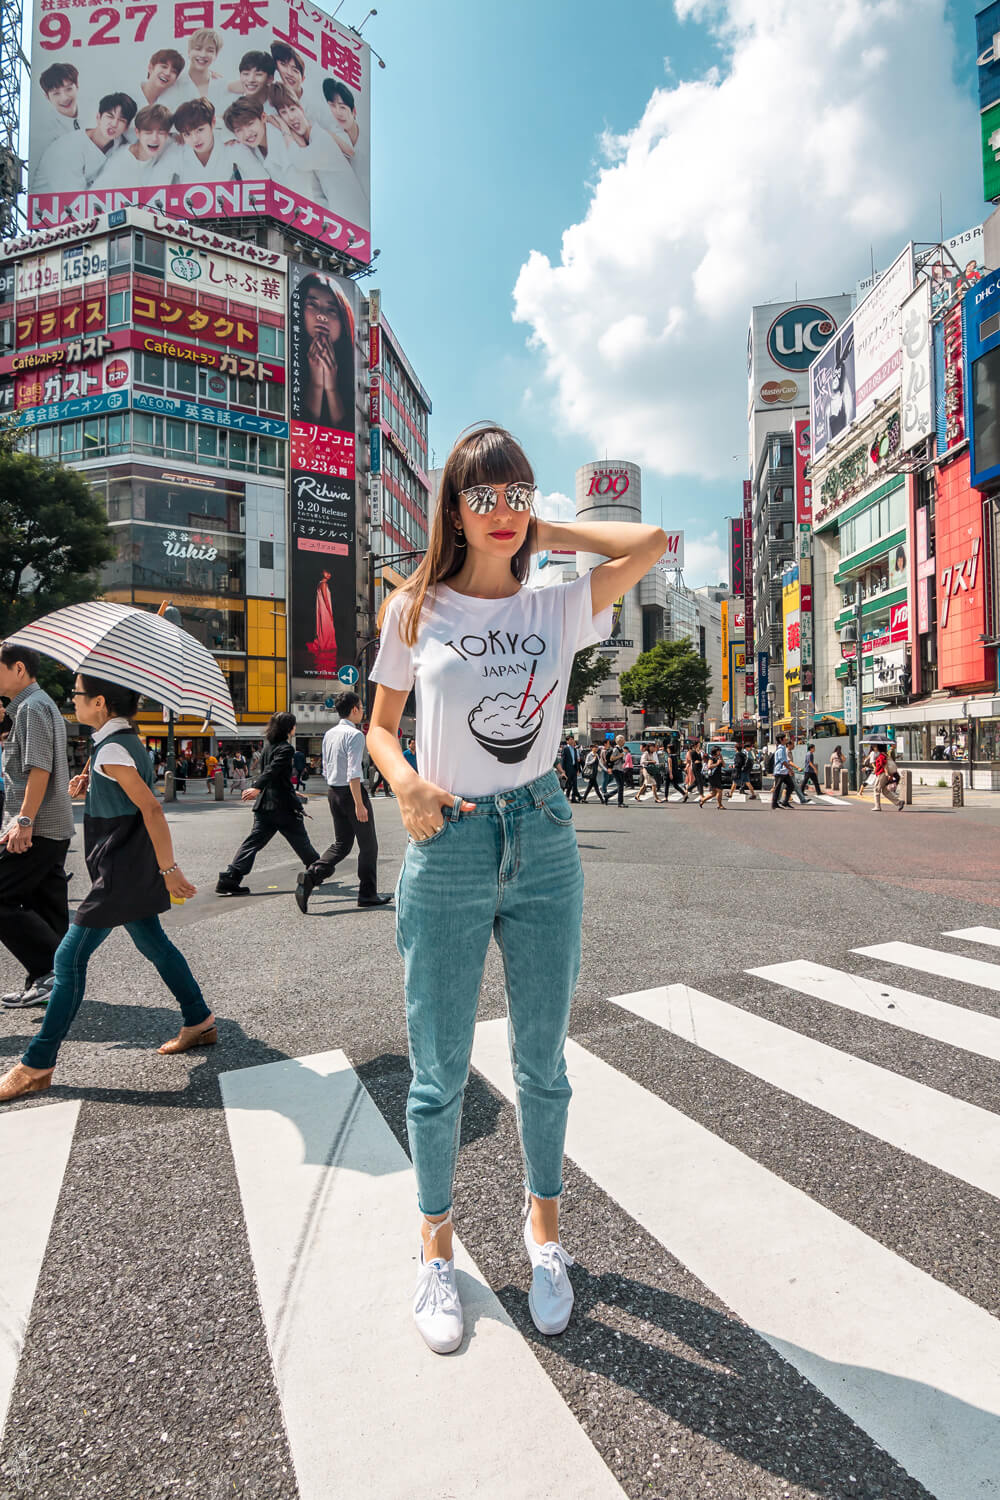 20 Photos to Inspire You to Visit Tokyo Japan | SHIBUYA